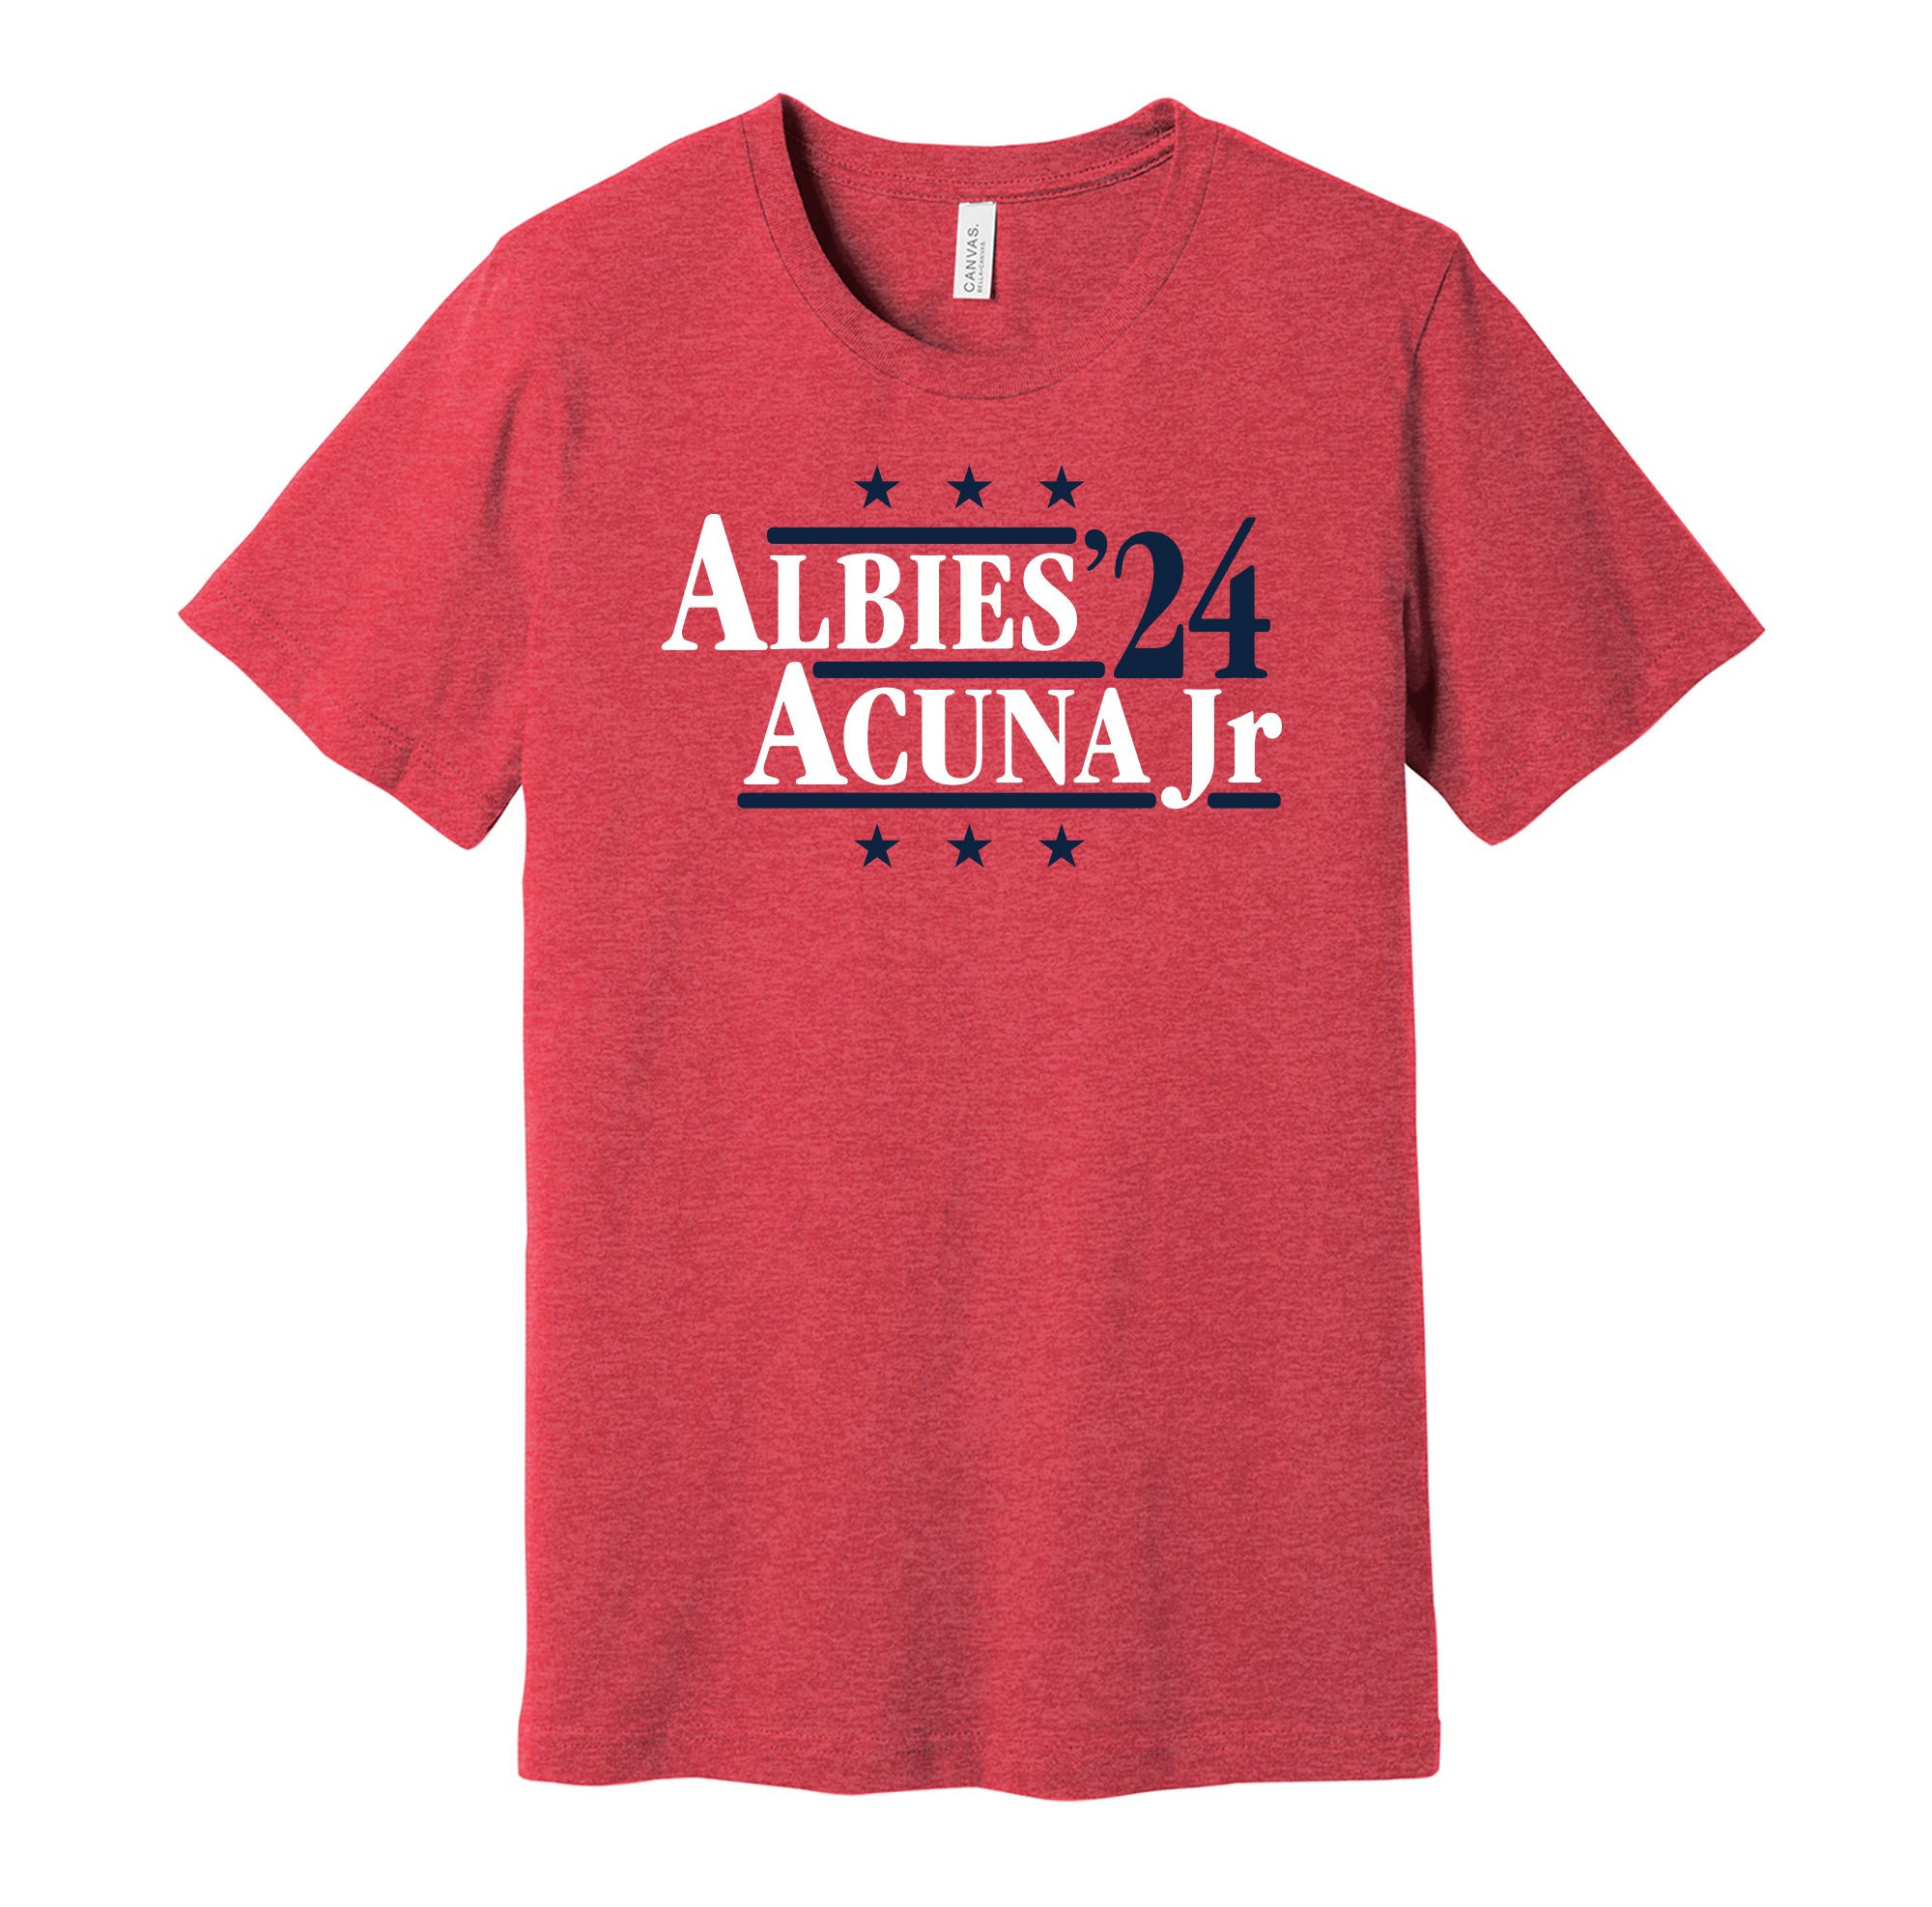 Albies & Acuna Jr '24 - Atlanta Baseball Political Campaign Parody T-Shirt - Hyper Than Hype Shirts XS / Red Shirt